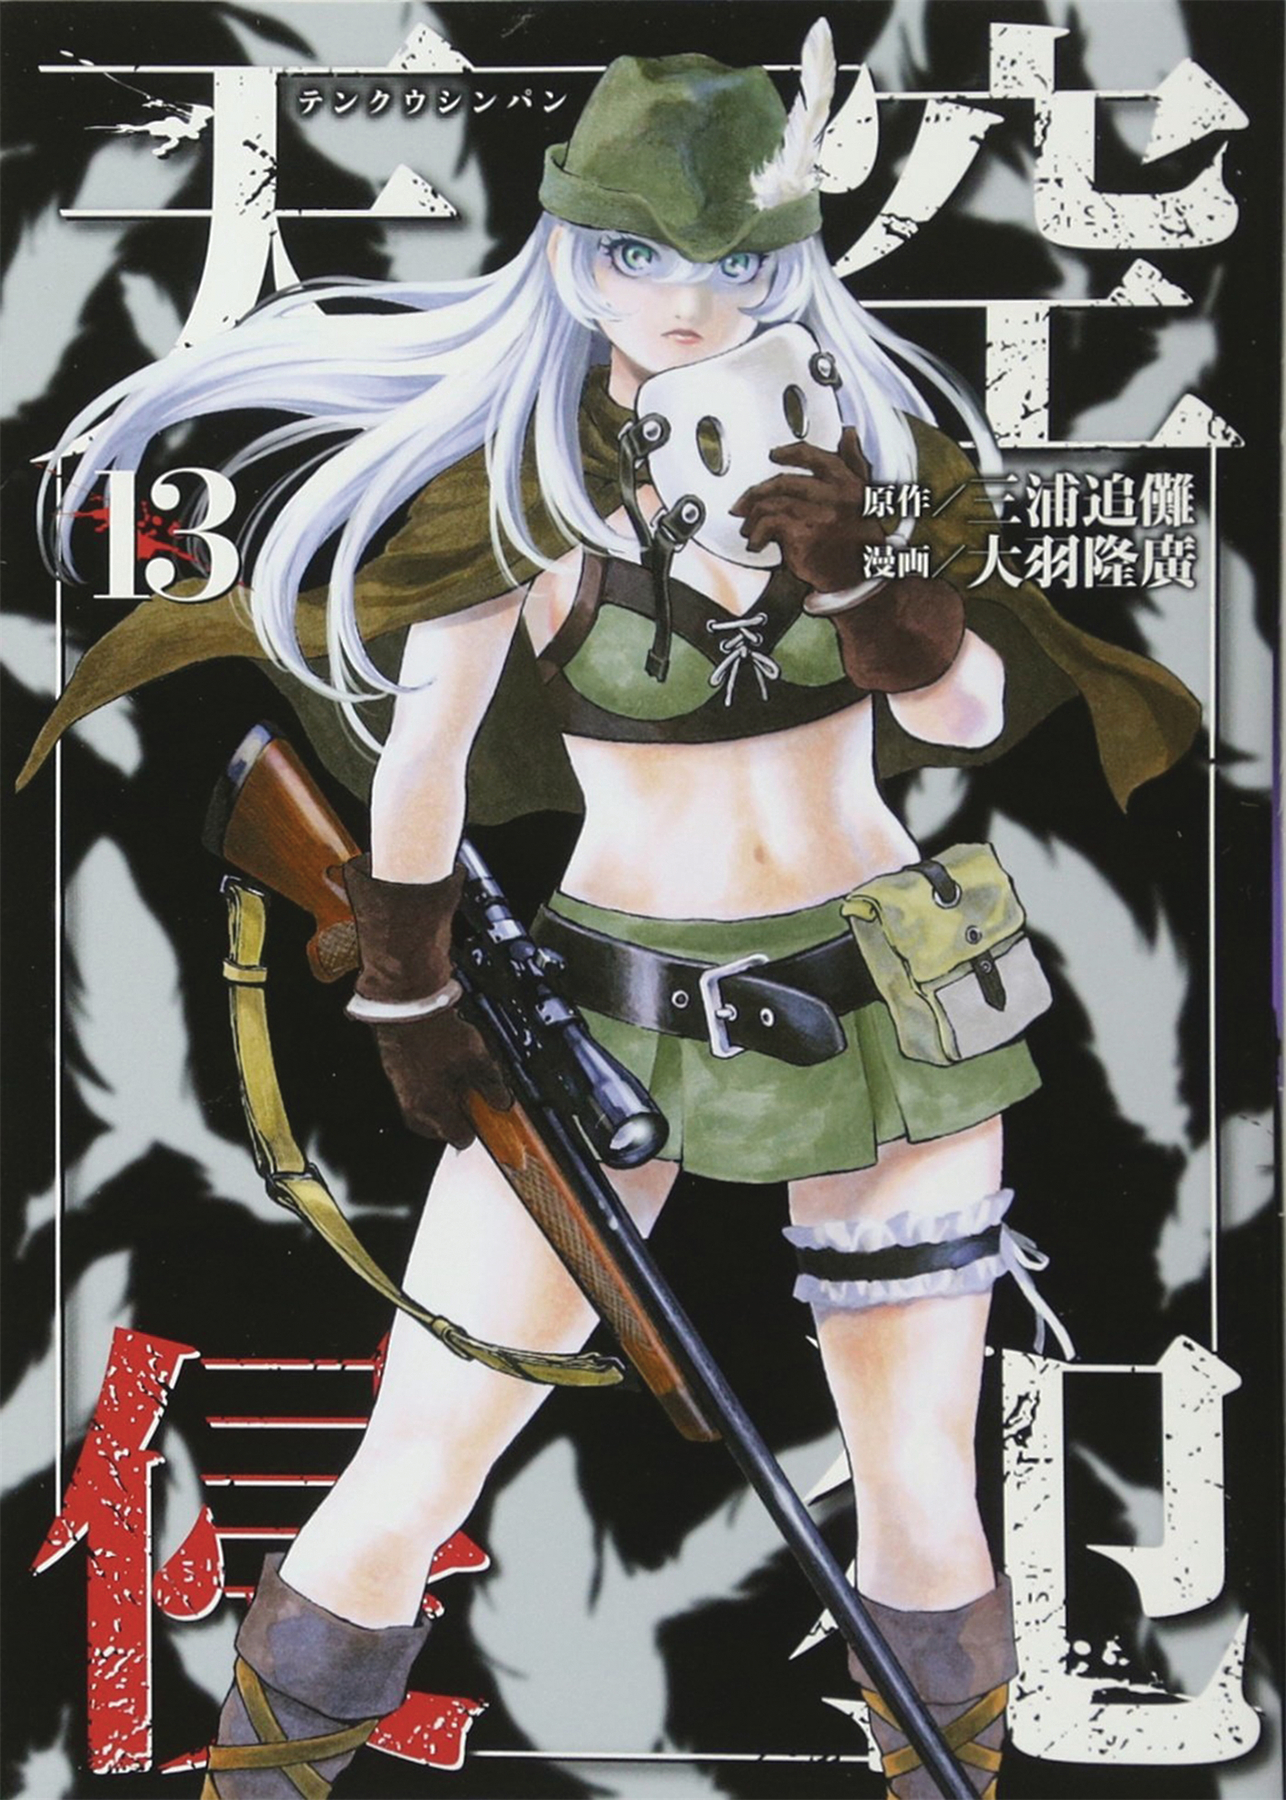 High Rise Invasion Manga Volume 7 (Collects Volume 13 & 14) (Mature)